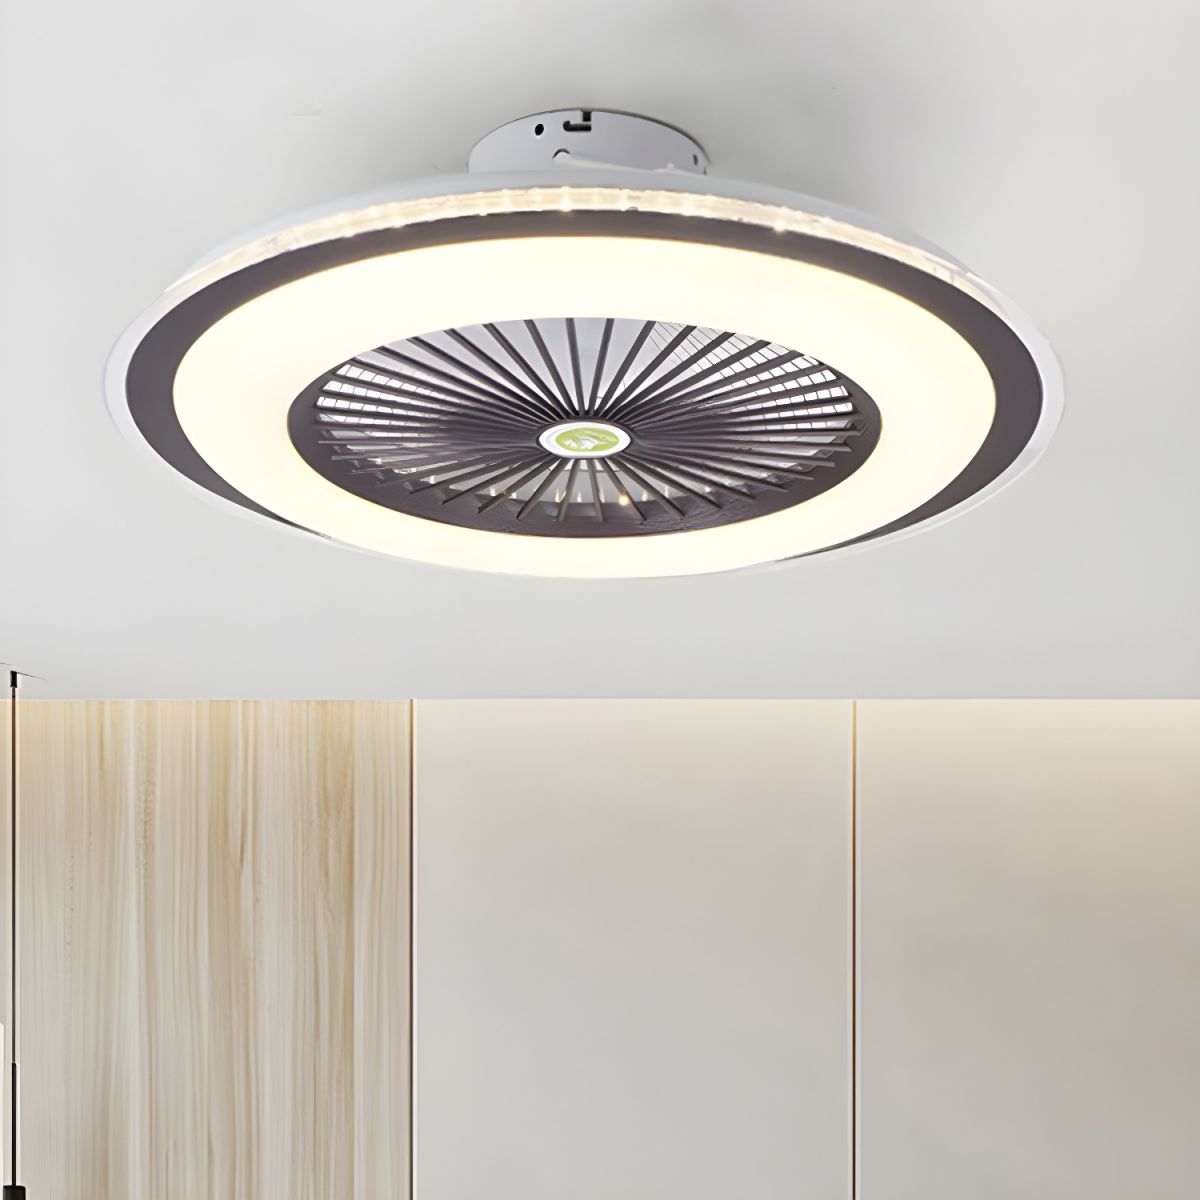 Acrylic Circular Semi Flush Mount LED Ceiling Fan Light 5 Blades